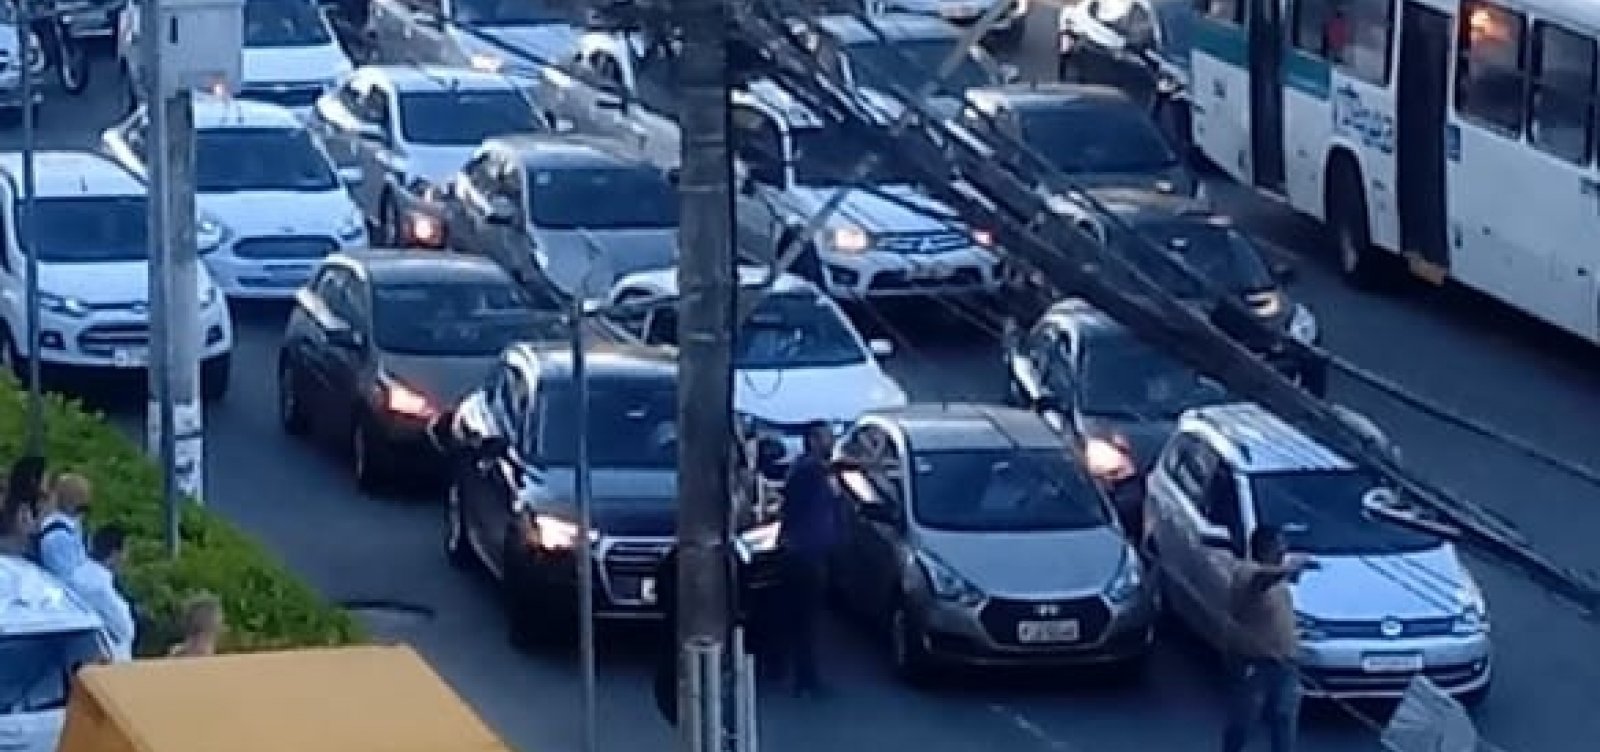 Carreata de motoristas do Uber fecha Avenida Tancredo Neves